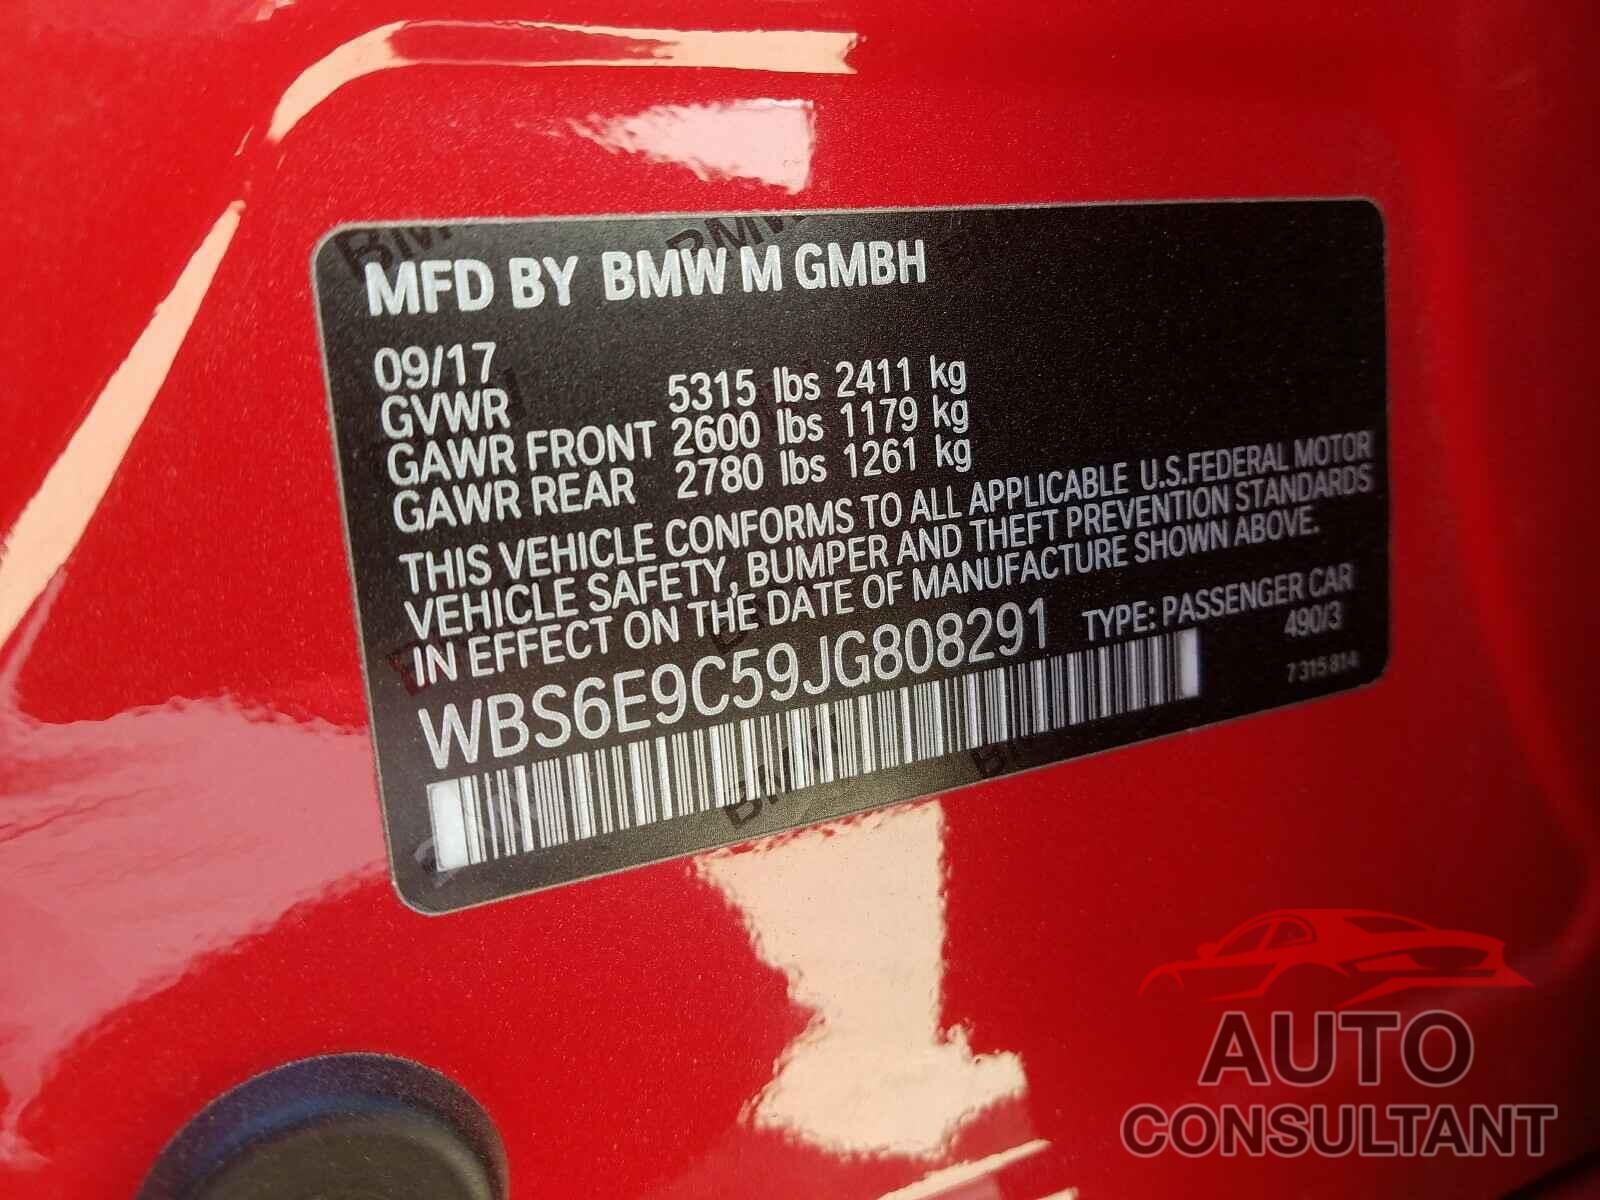 BMW M6 2018 - WBS6E9C59JG808291